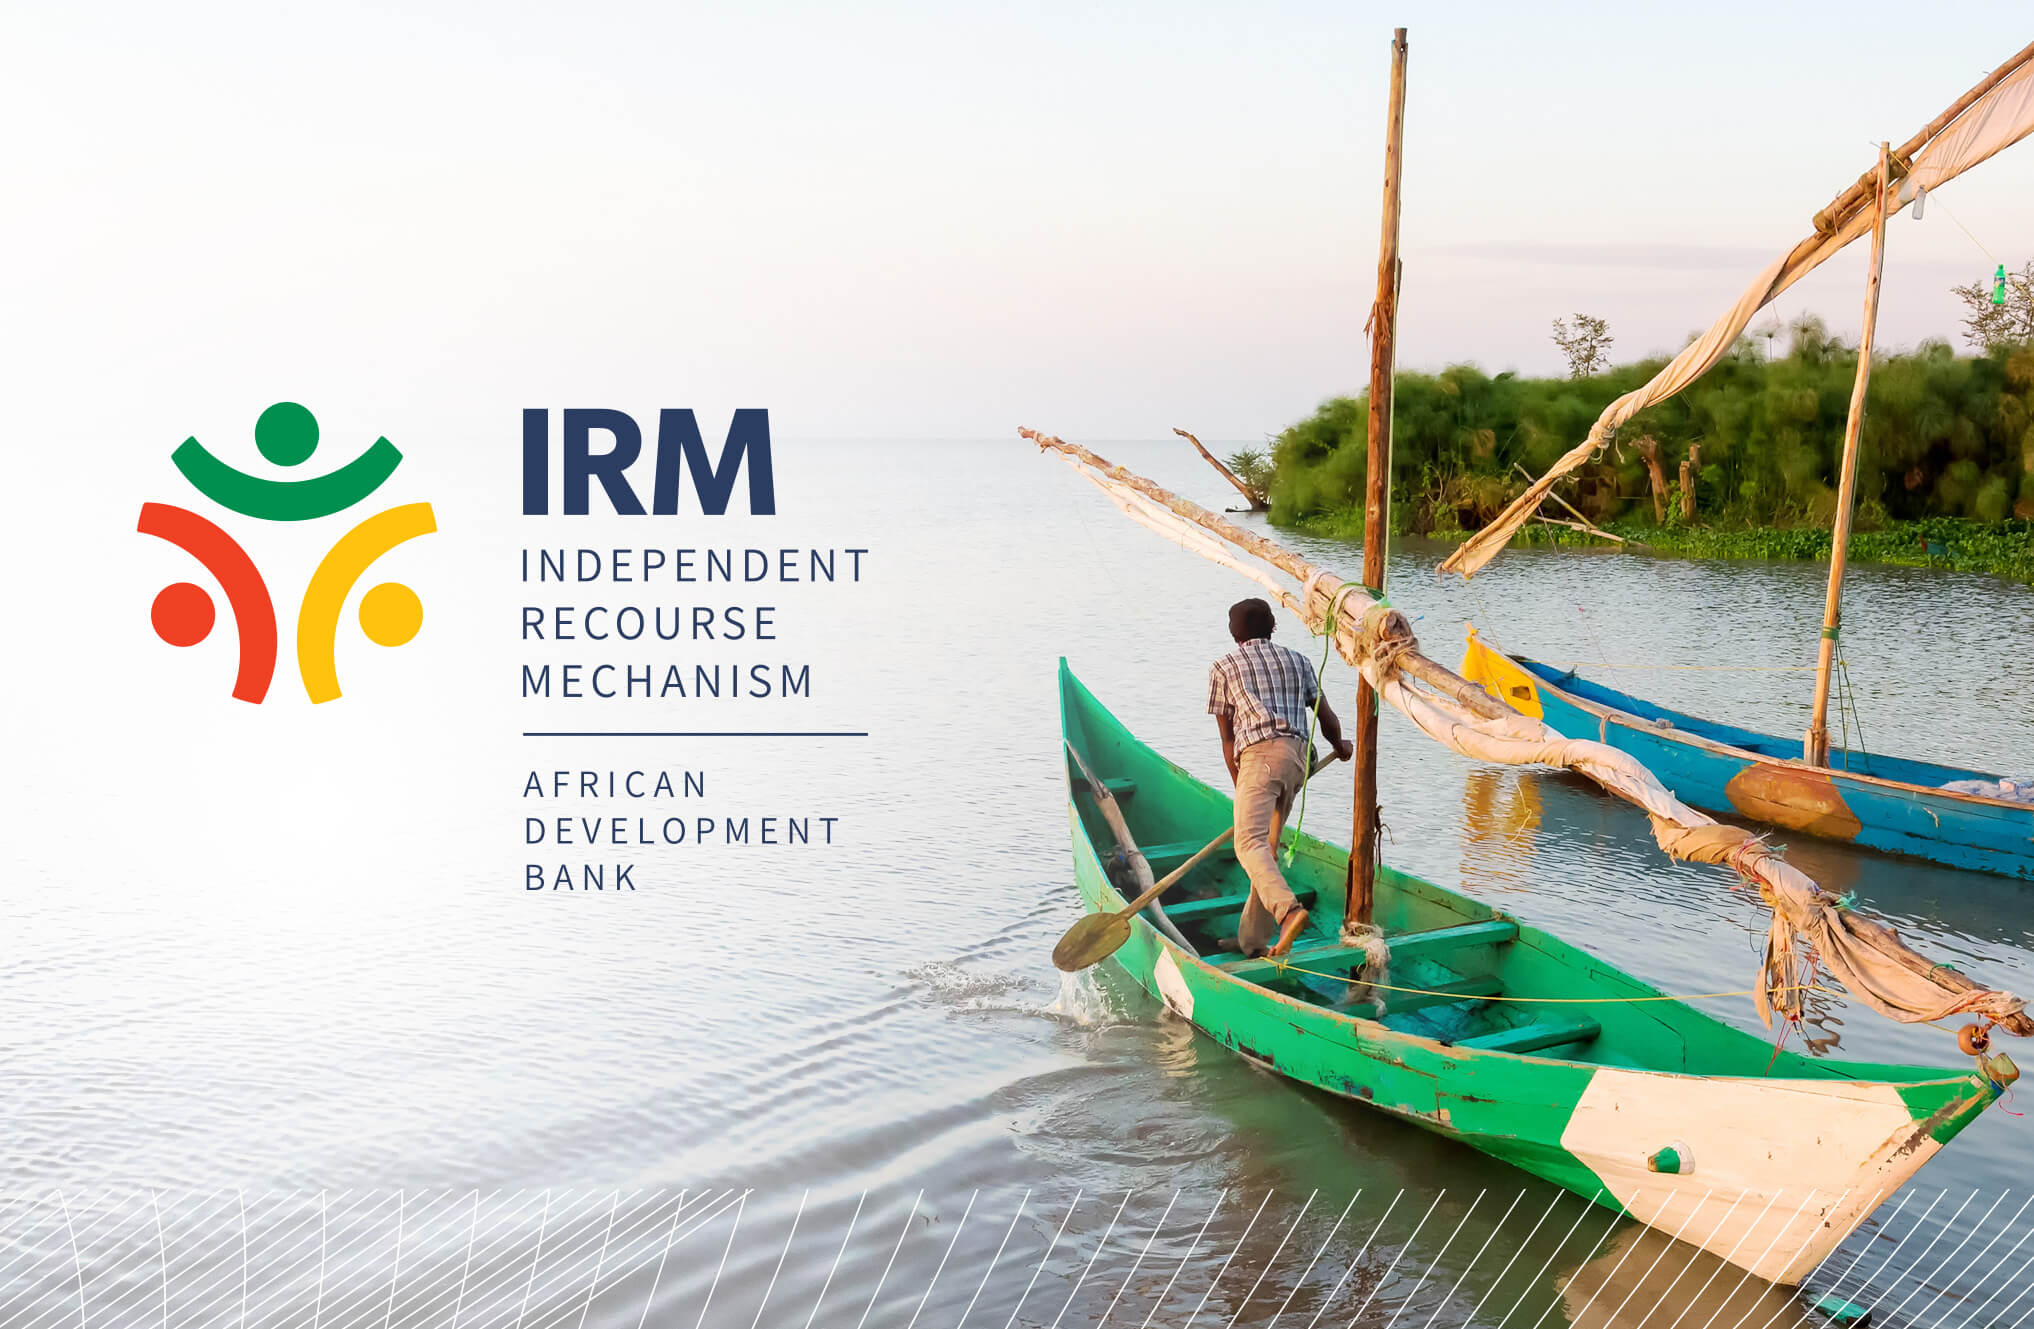 IRM Independent Recourse Mechanism - African Development Bank. Fisherman